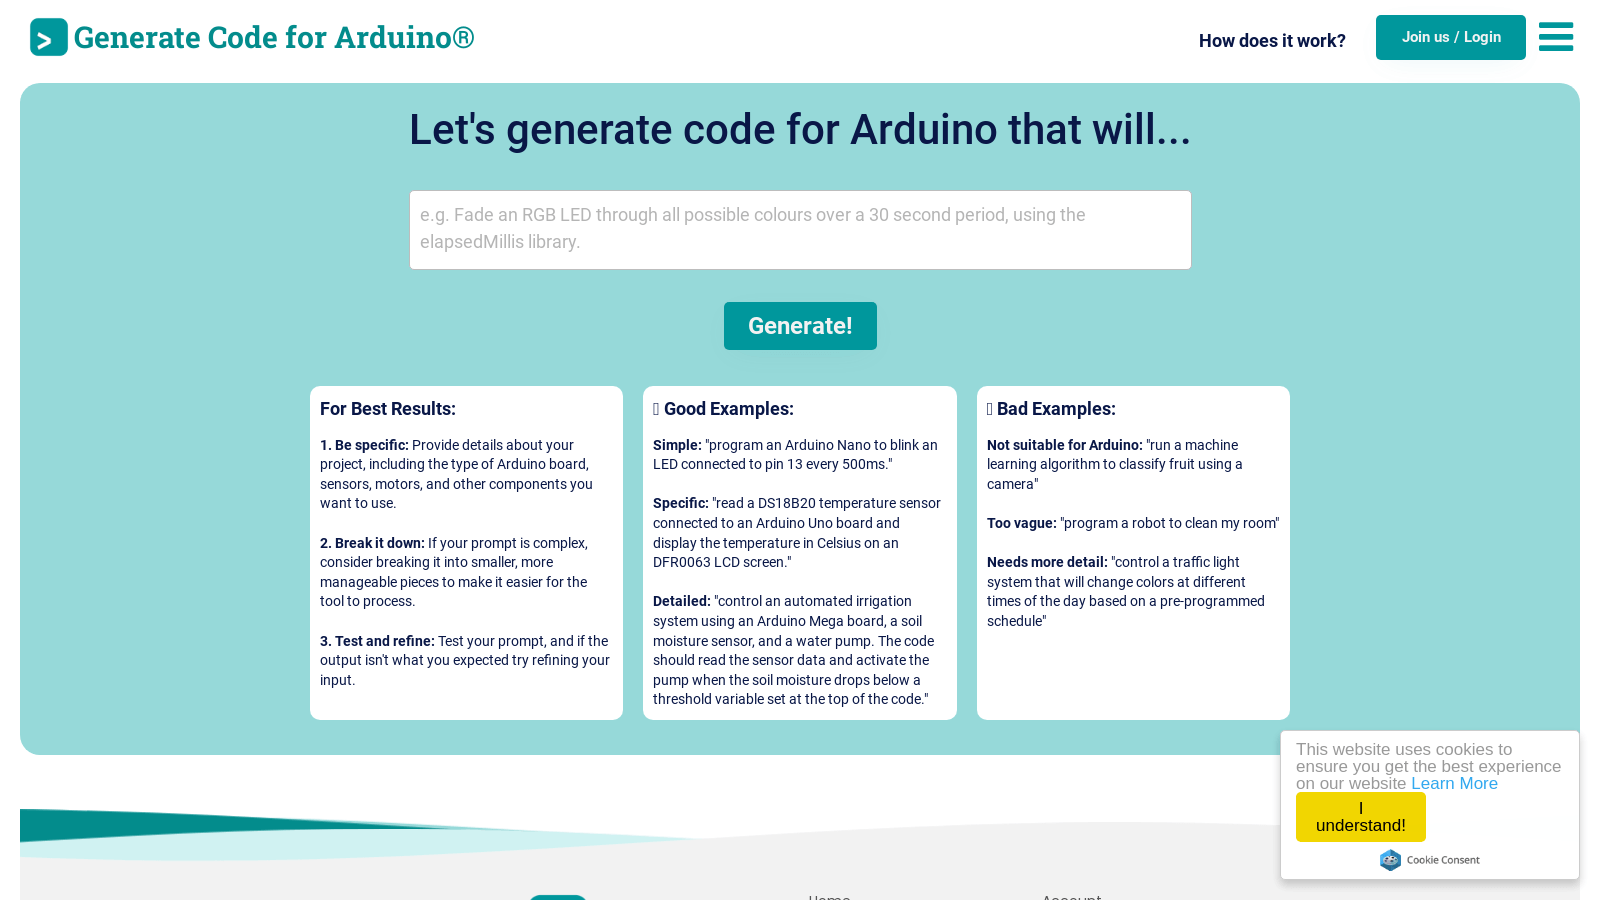 duinocodegenerator.com